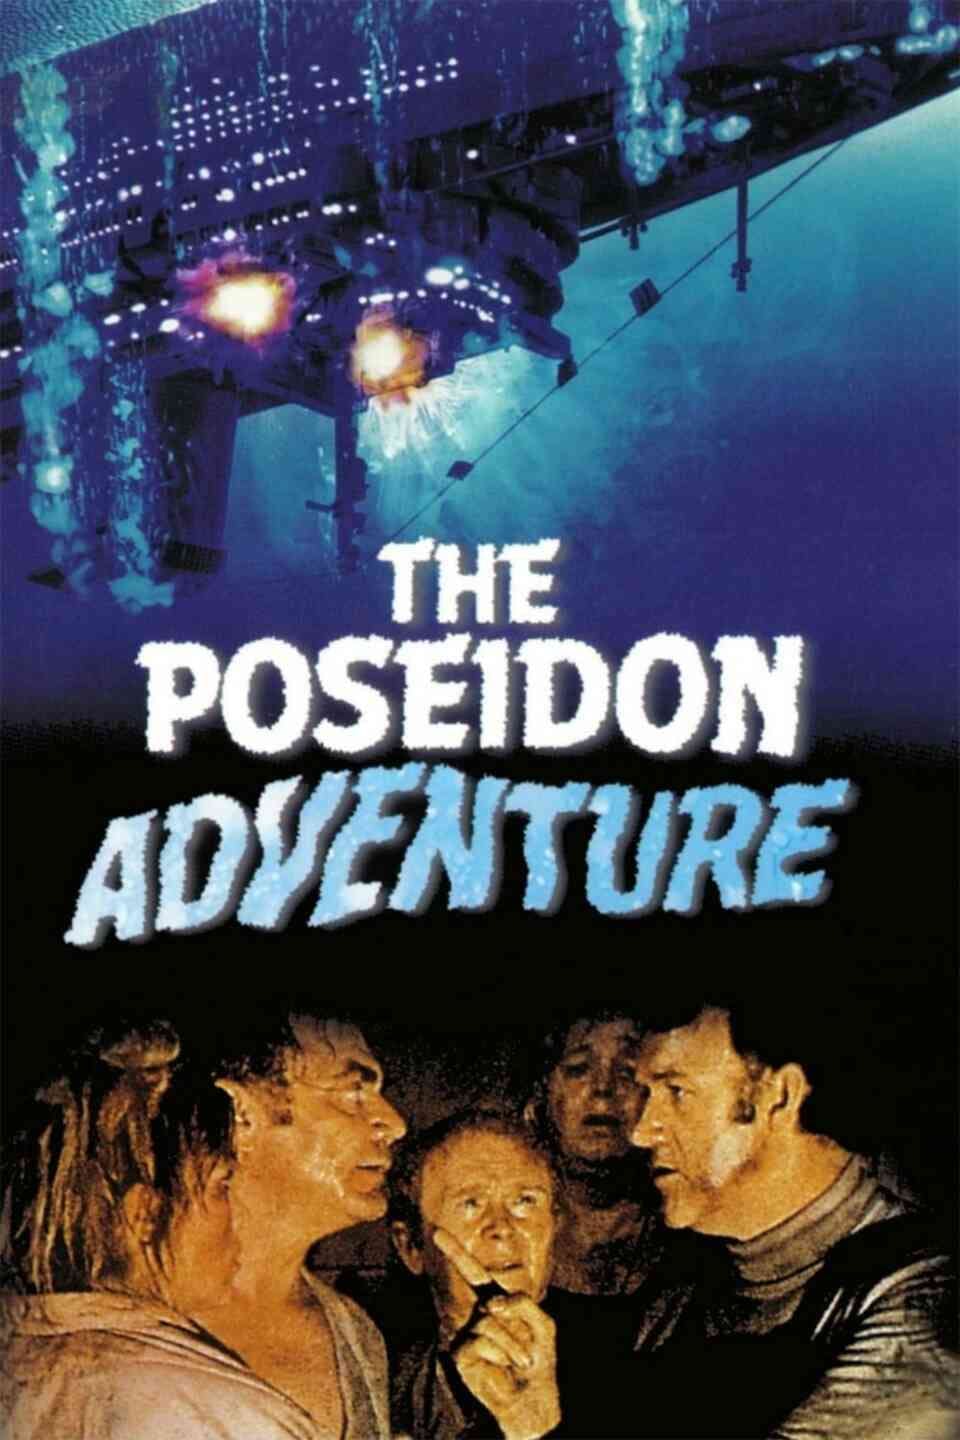 Read The Poseidon Adventure screenplay (poster)